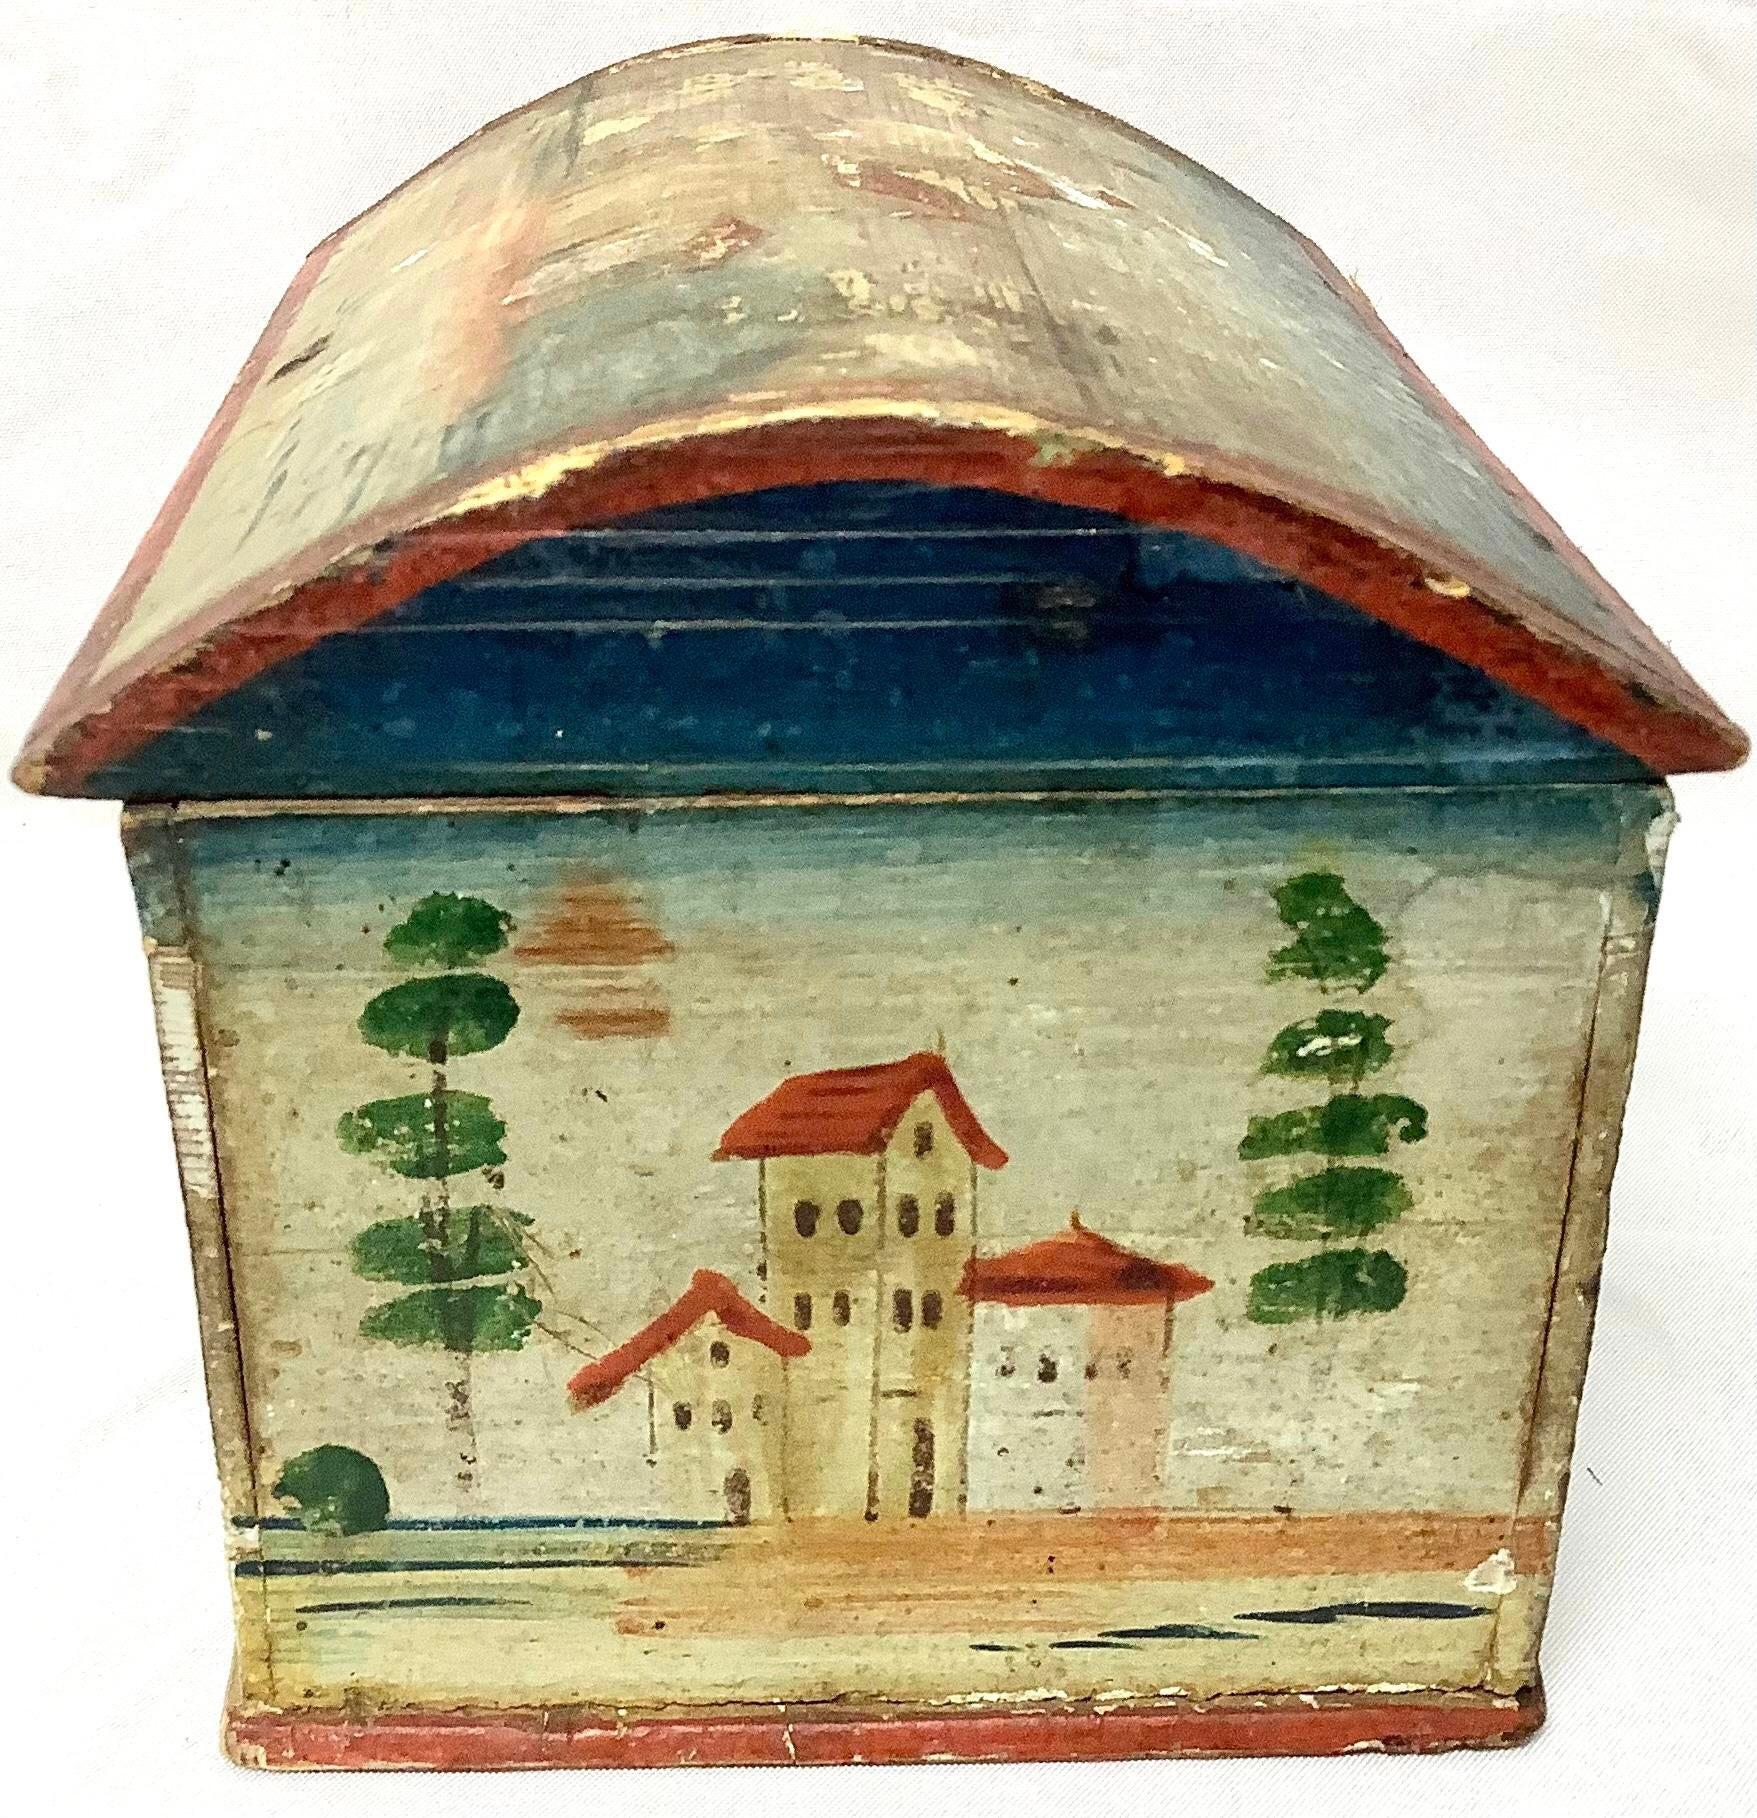 19th century European hand painted domed trinket box, folk art style.